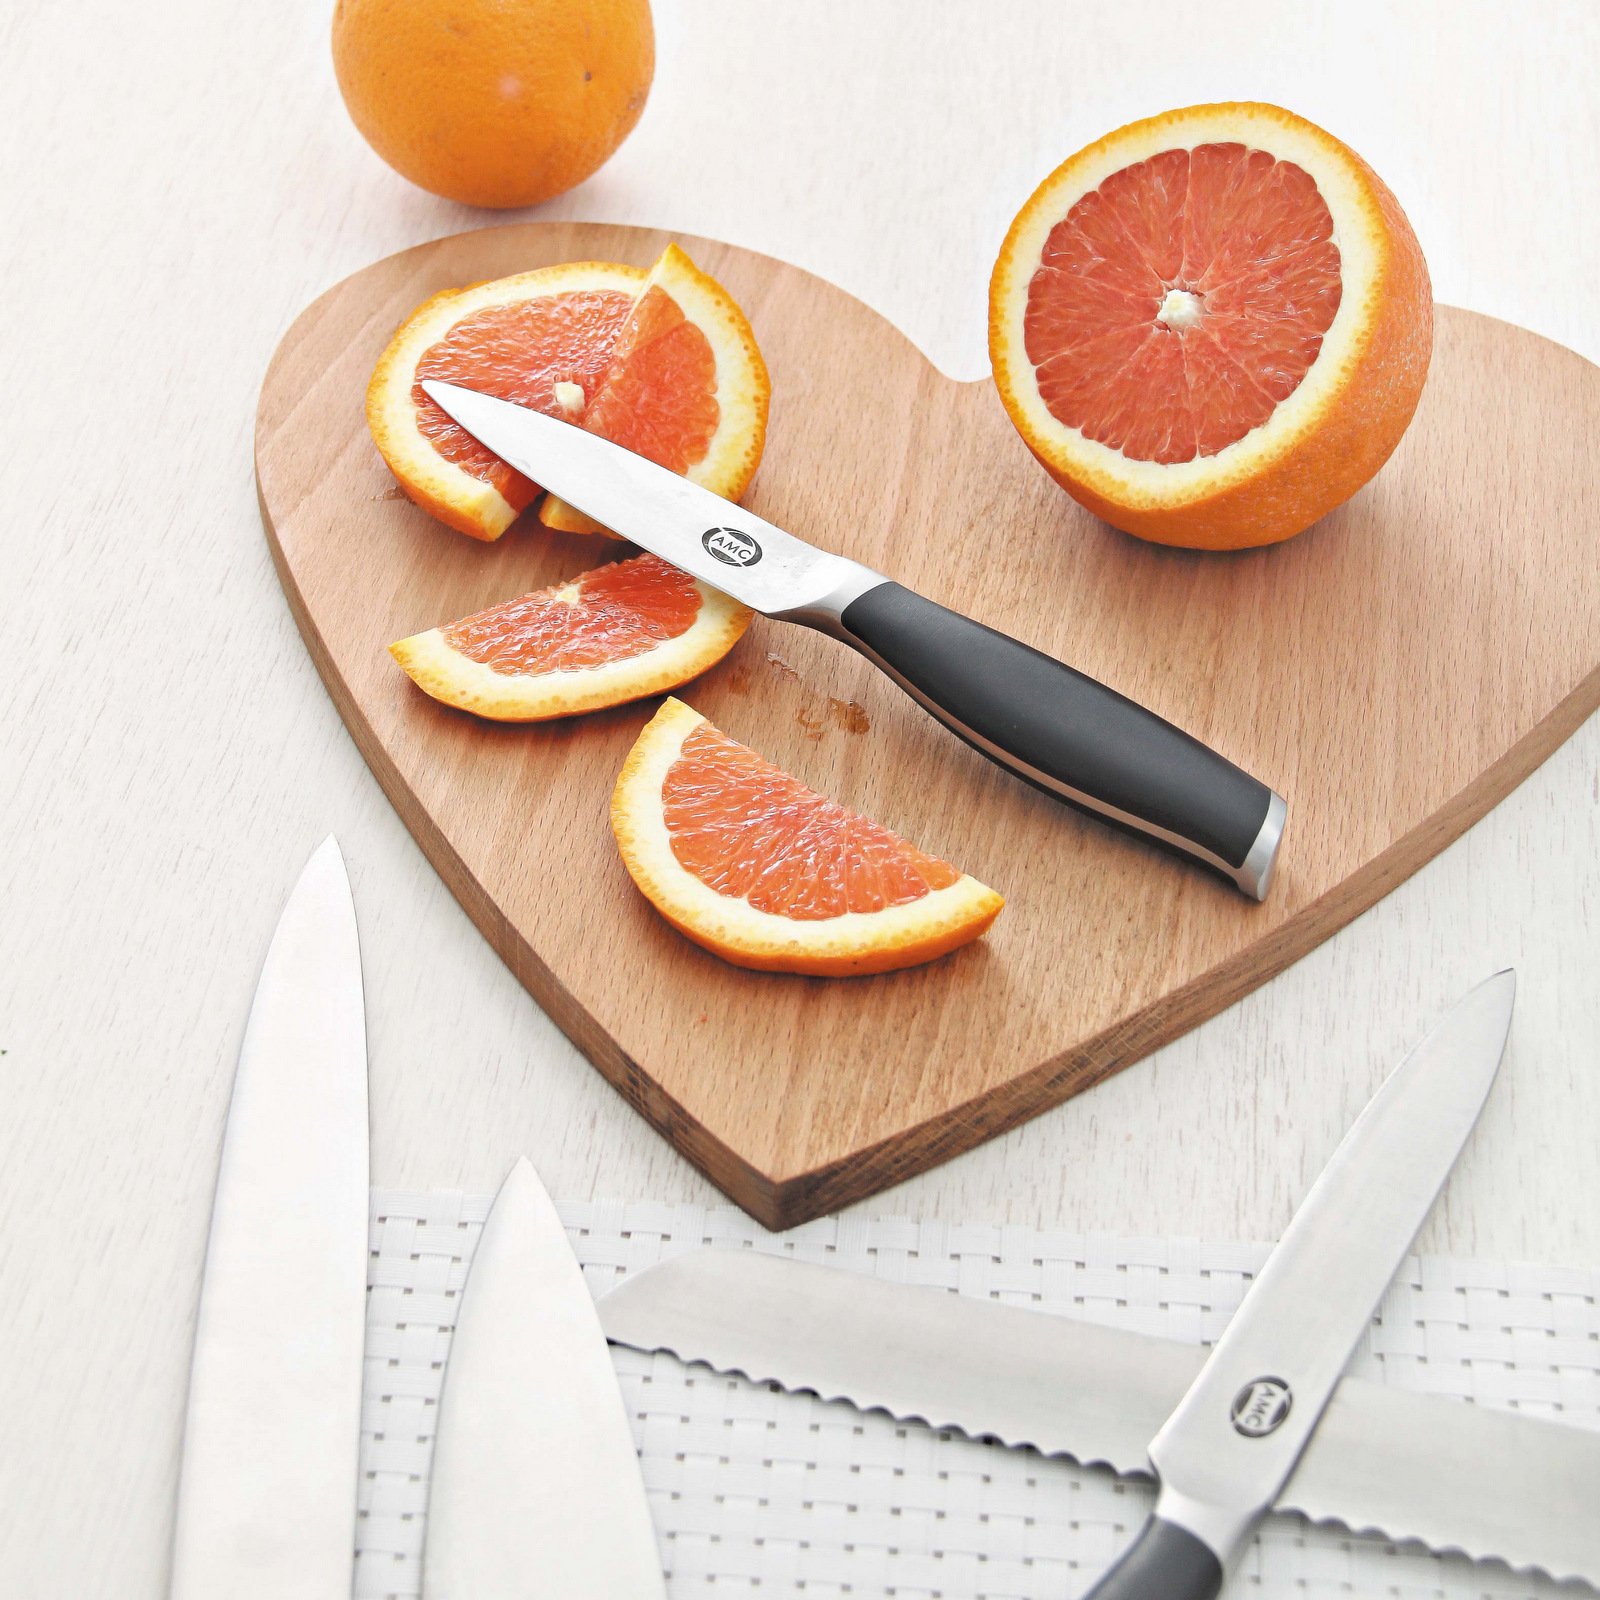 AMC Edge knives on cutting board with sliced orange.